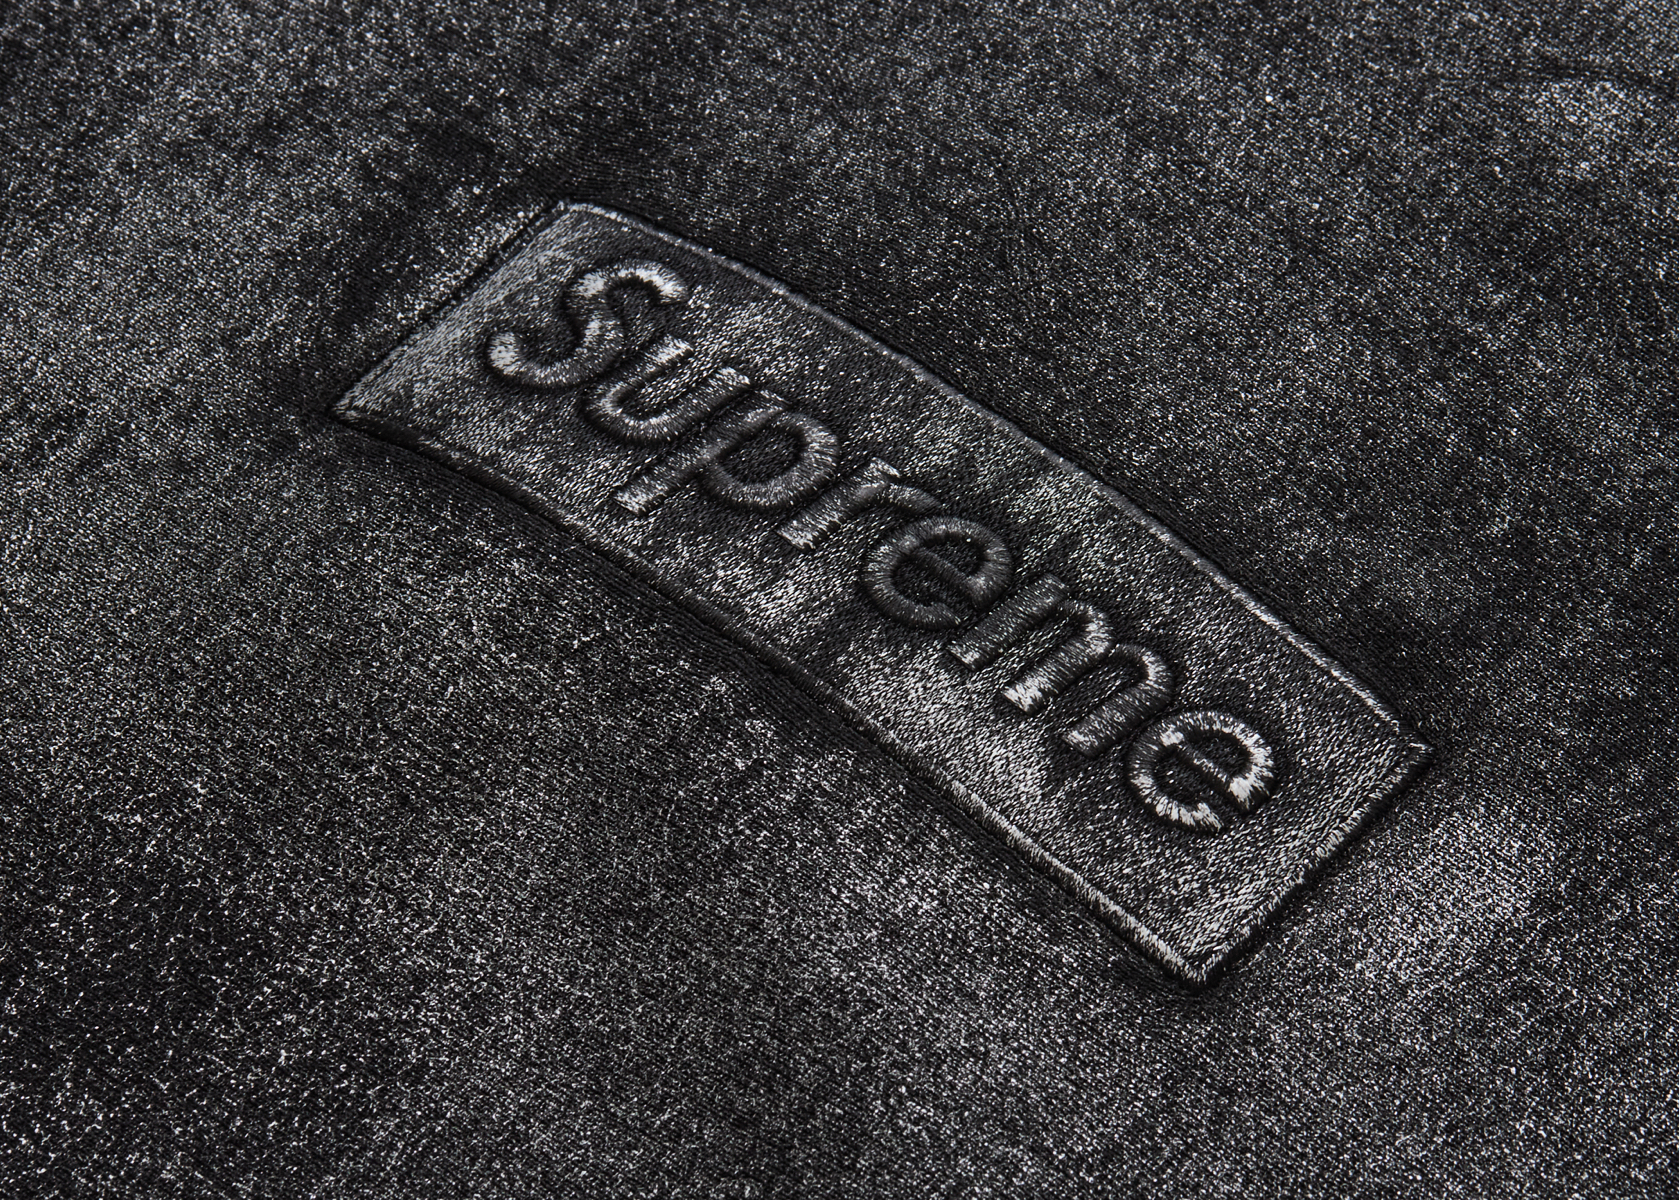 Supreme MM6 Maison Margiela Foil Box Logo Hooded Sweatshirt Black